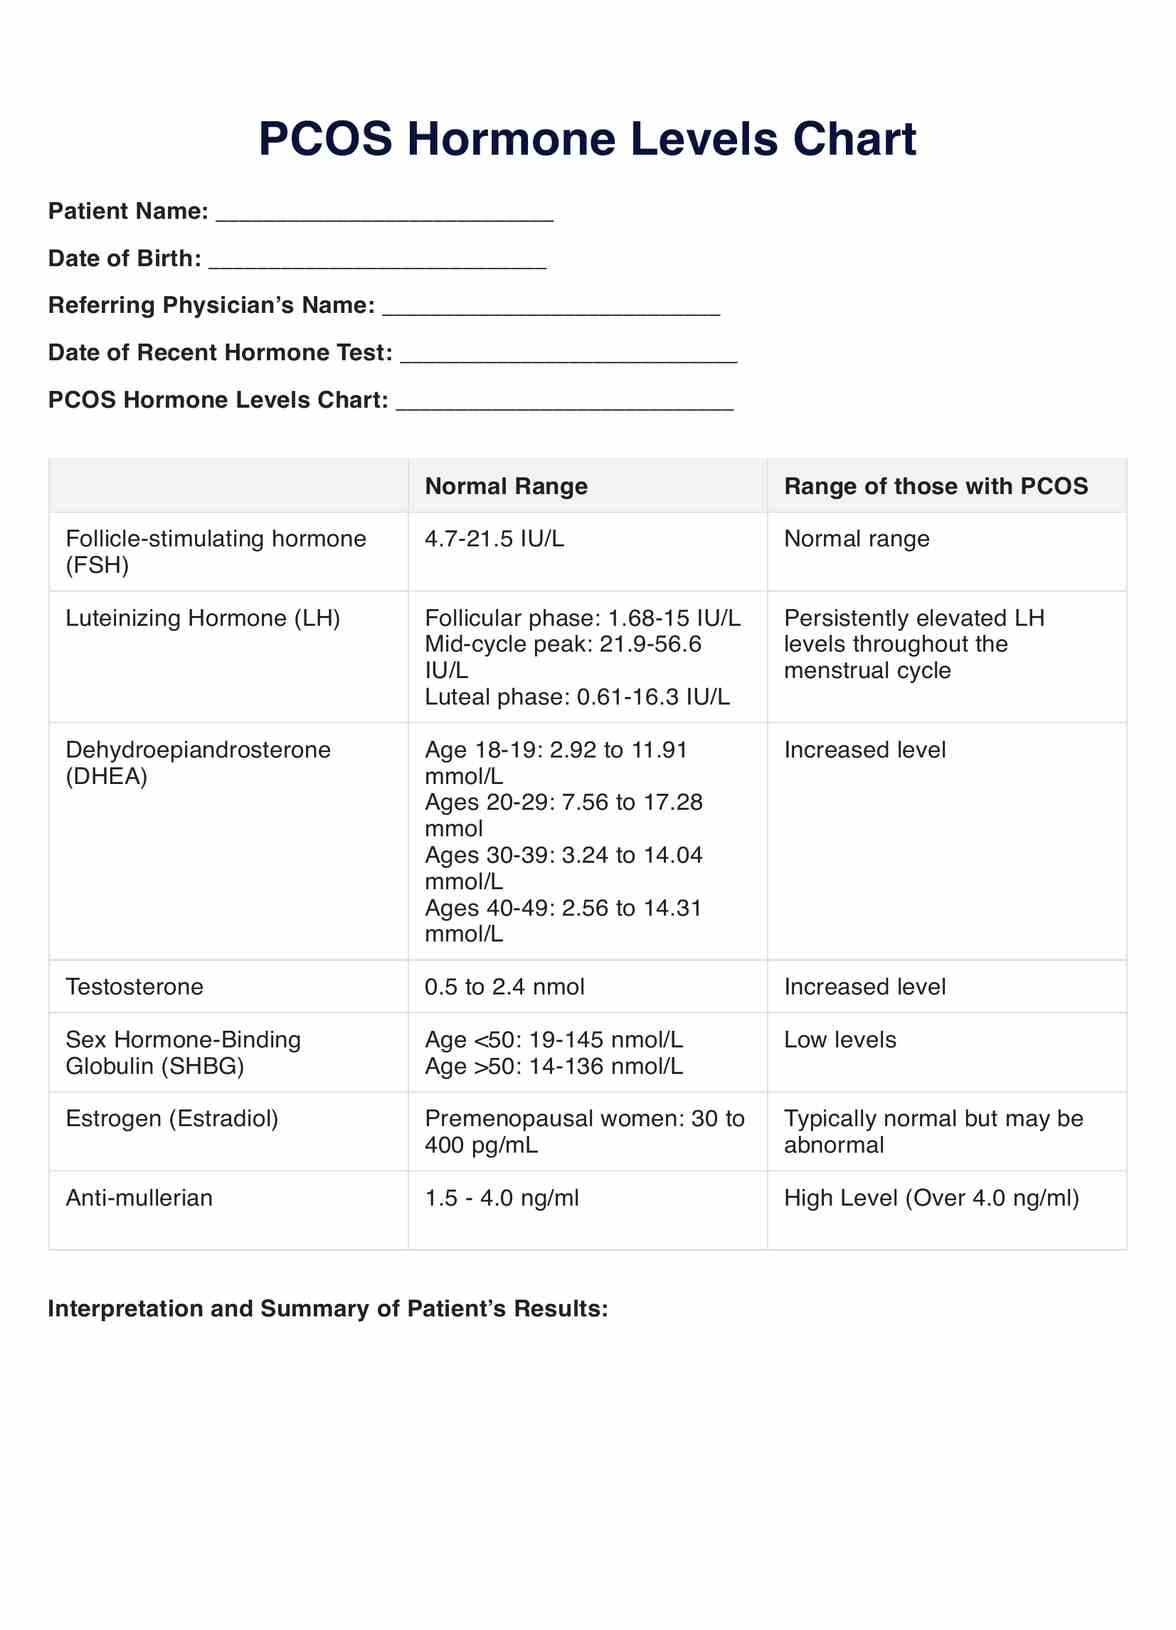 PCOS Hormone Levels Chart PDF Example